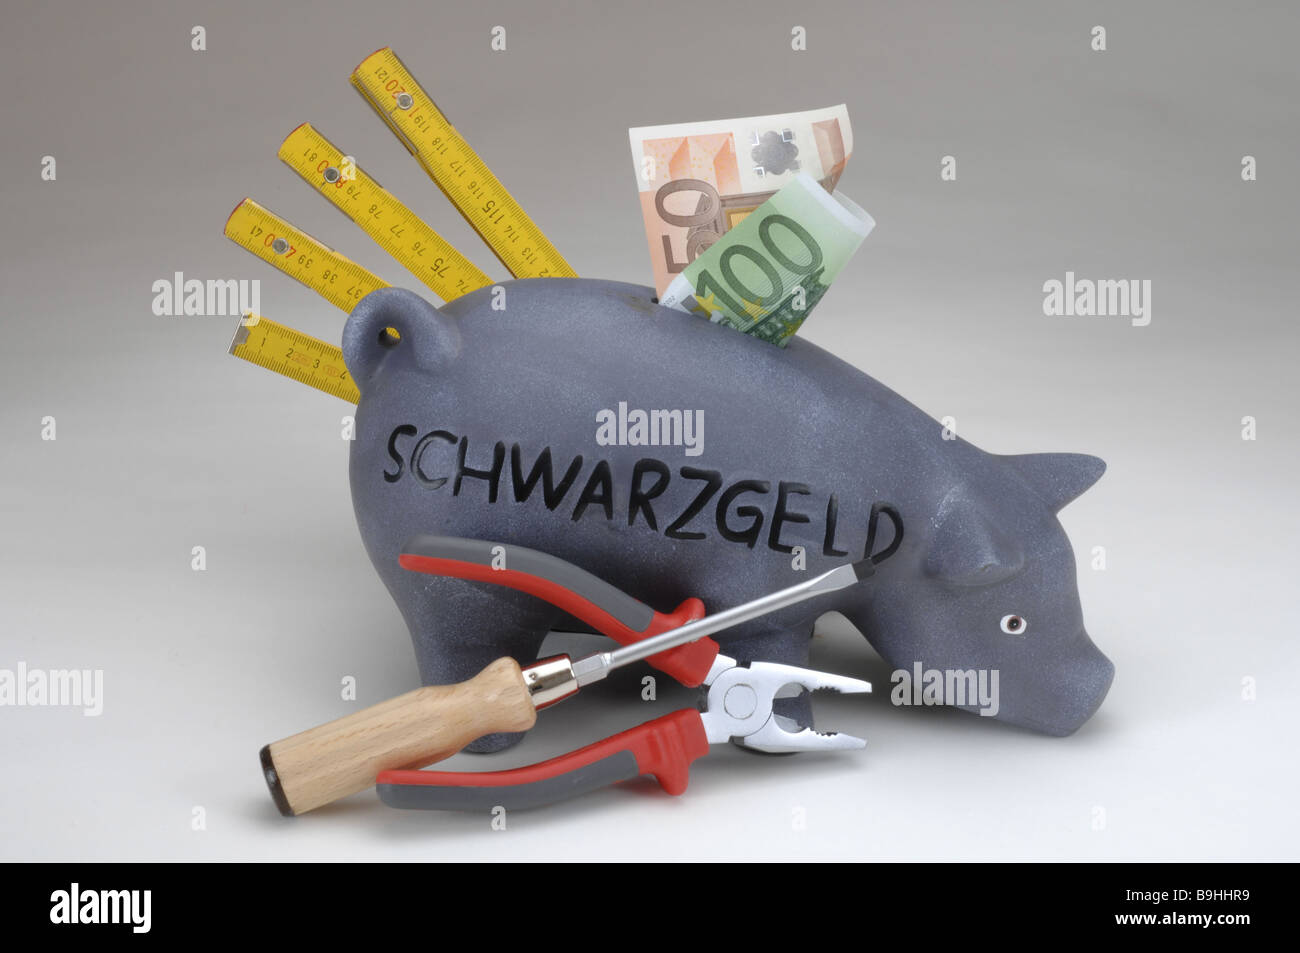 saving-pig bills Euro meter-rod tongs screw-turners screwdrivers craft-stuff tools craftspersons craft illicit work black cash Stock Photo